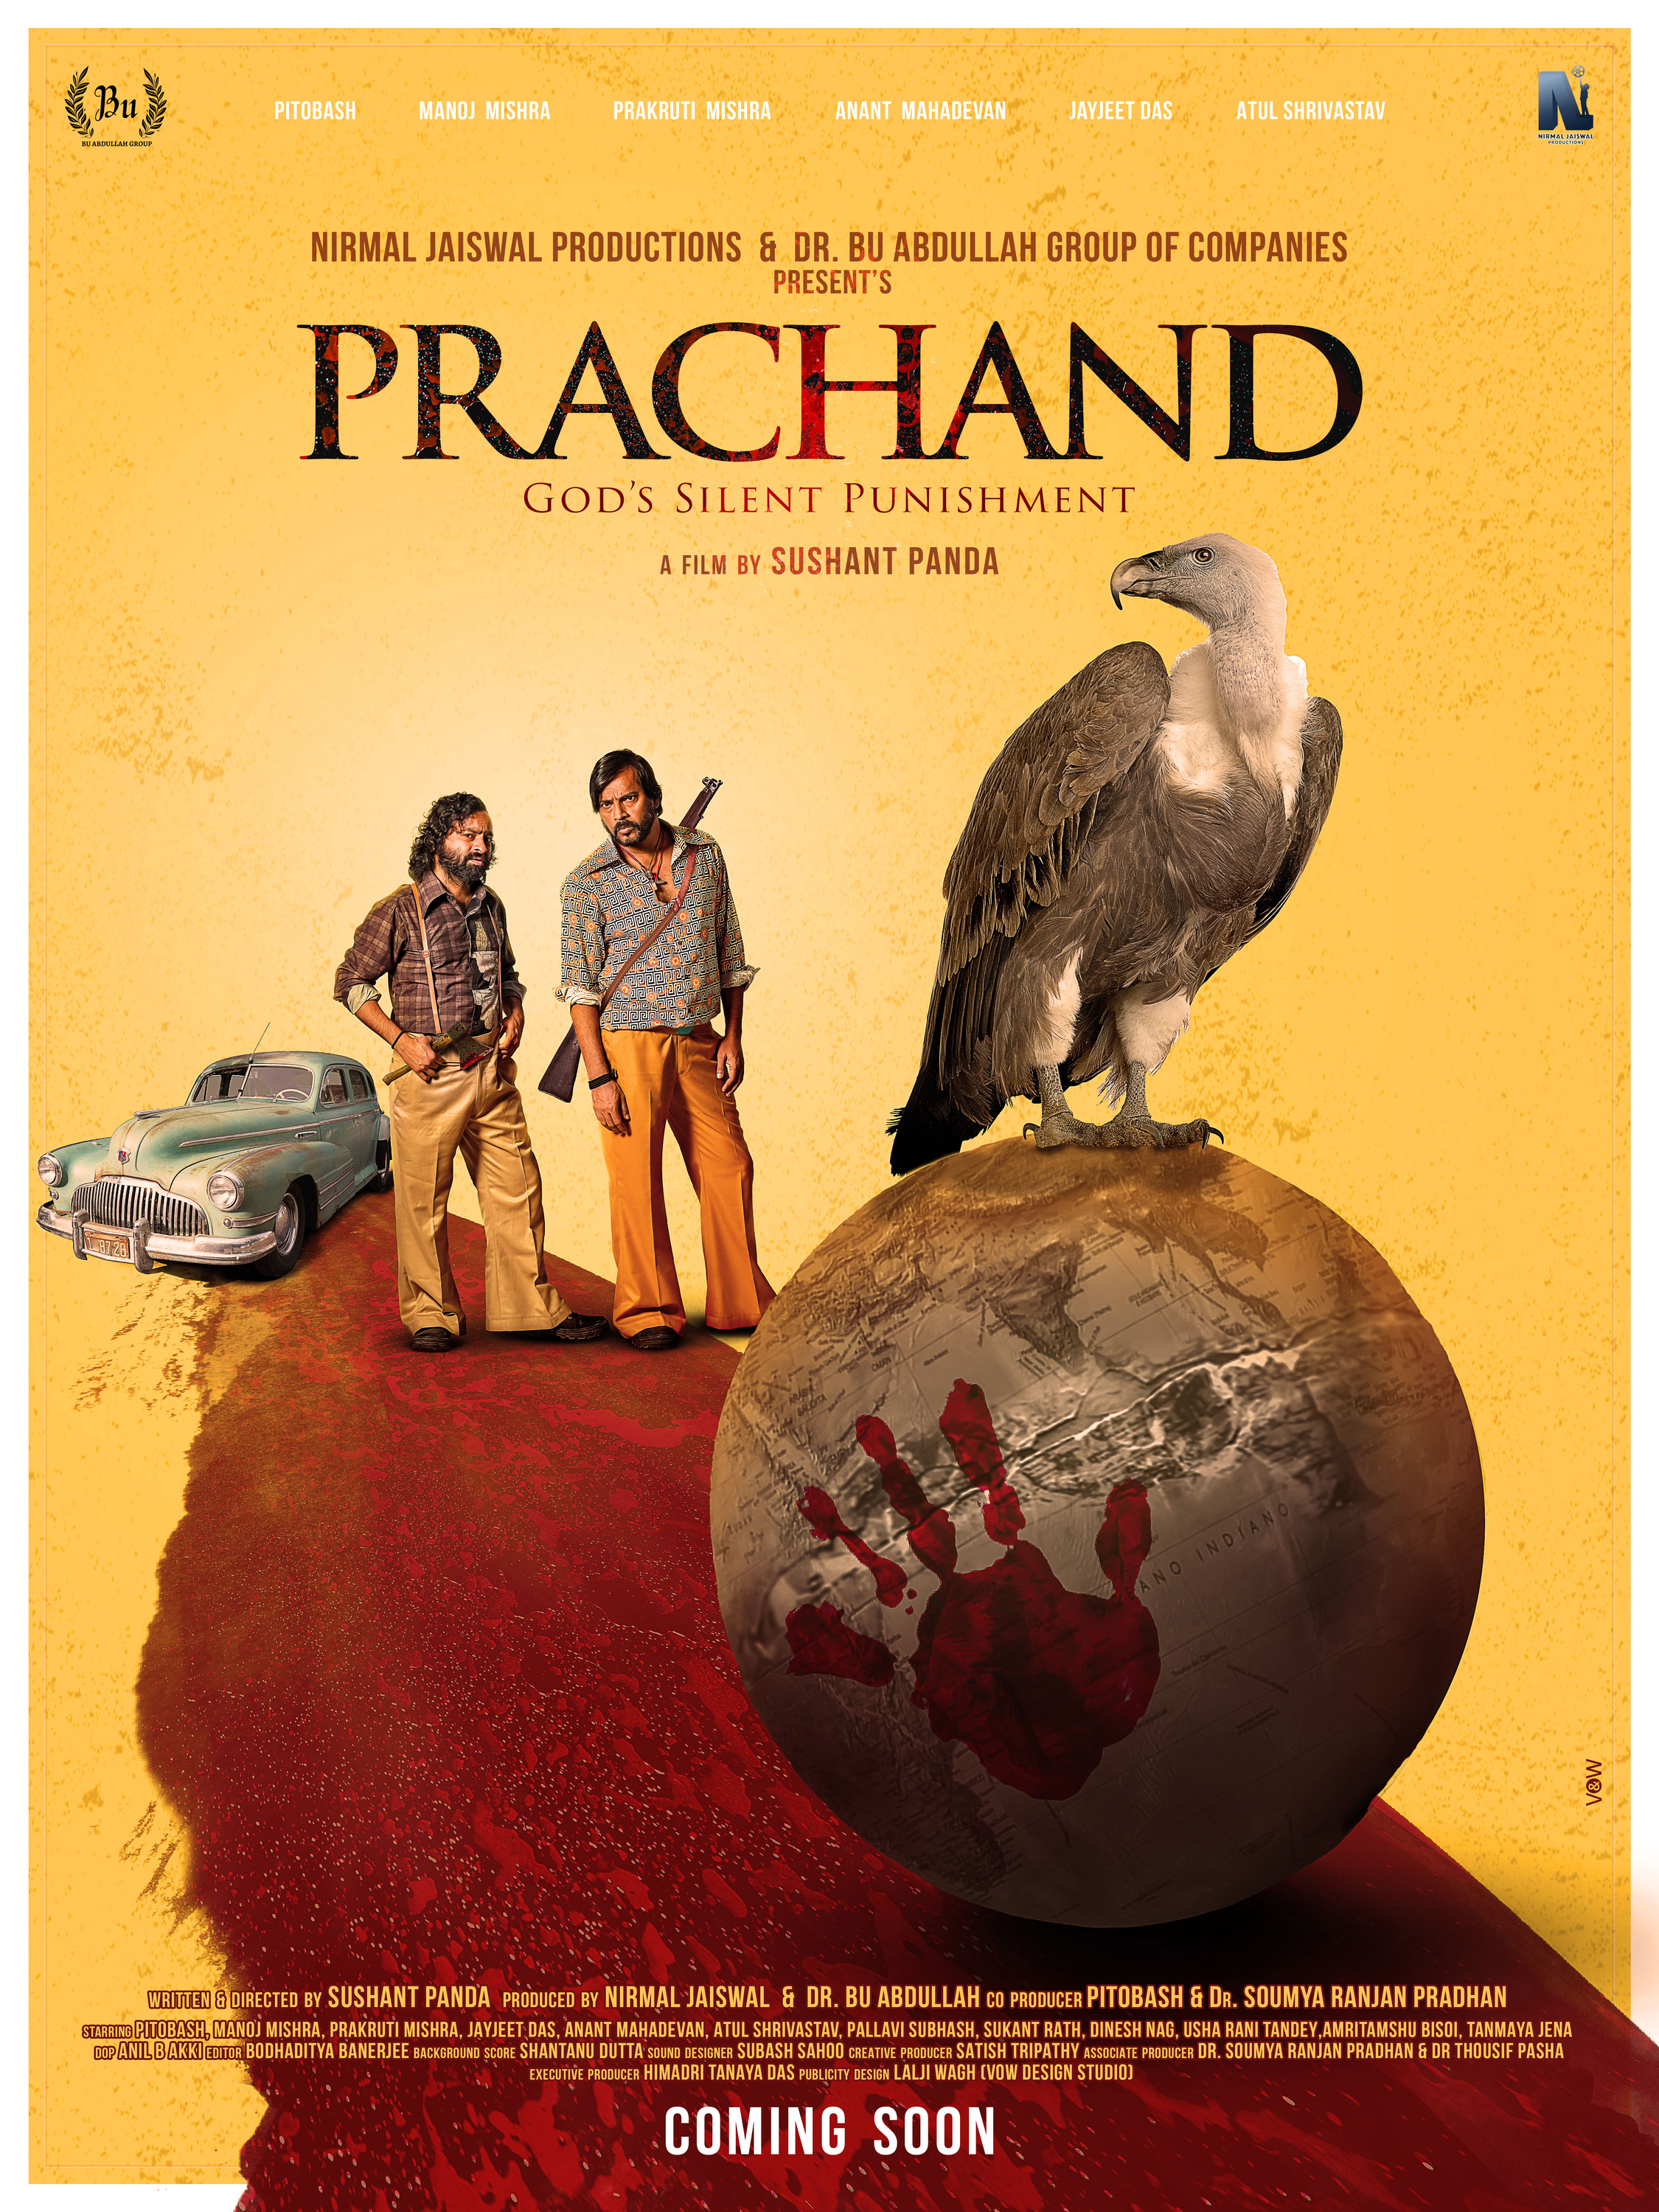 Mega Sized Movie Poster Image for Prachand 